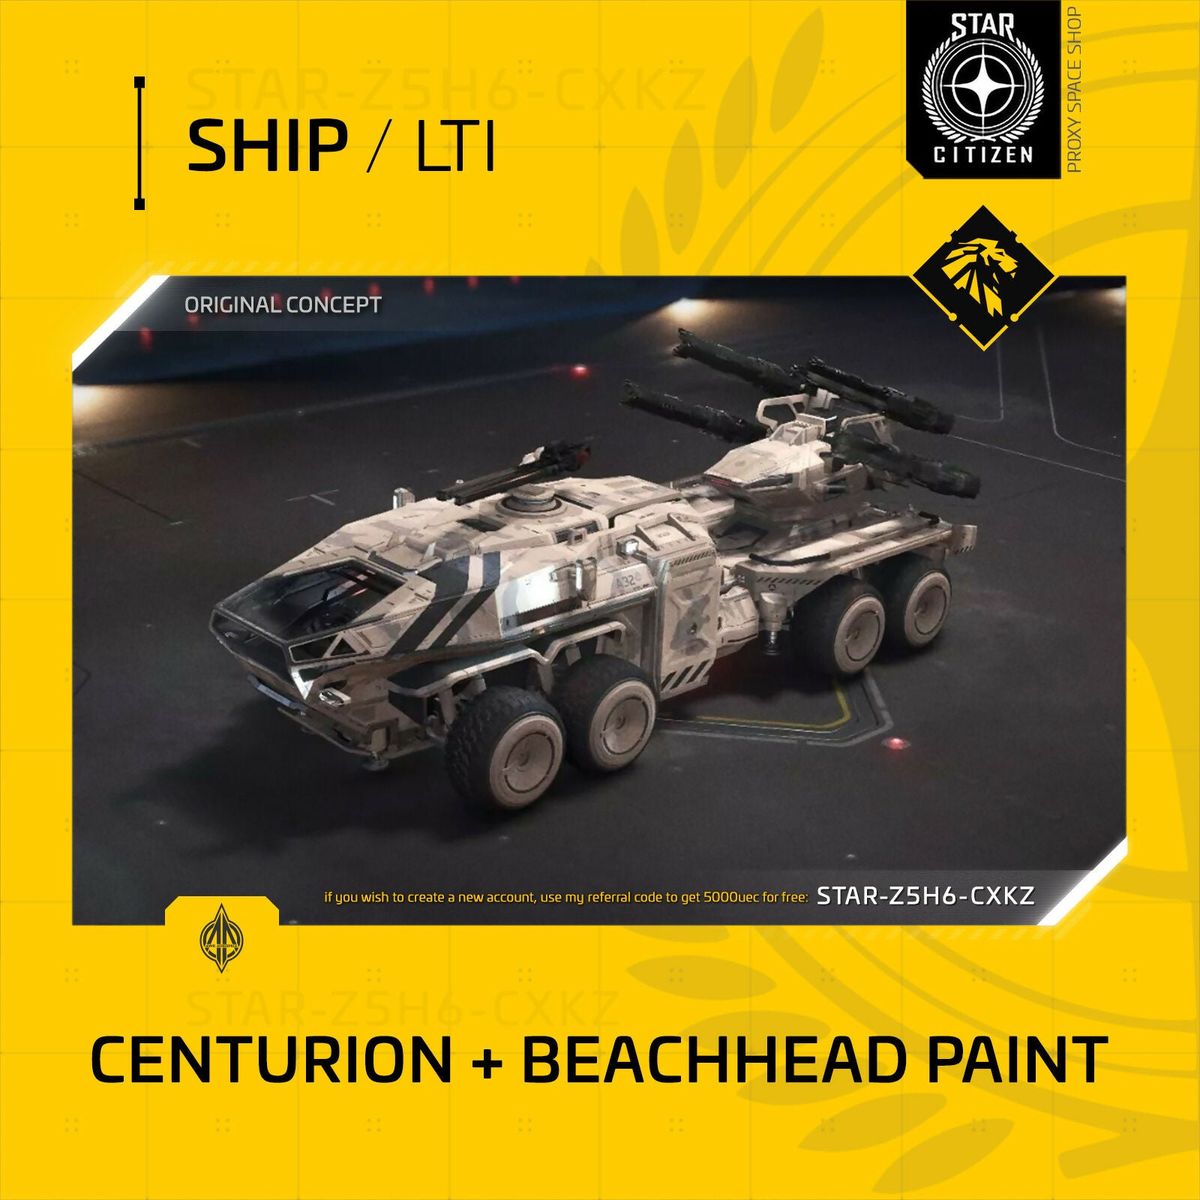 Anvil Centurion + Beachhead Paint - Lti - Original Concept OC